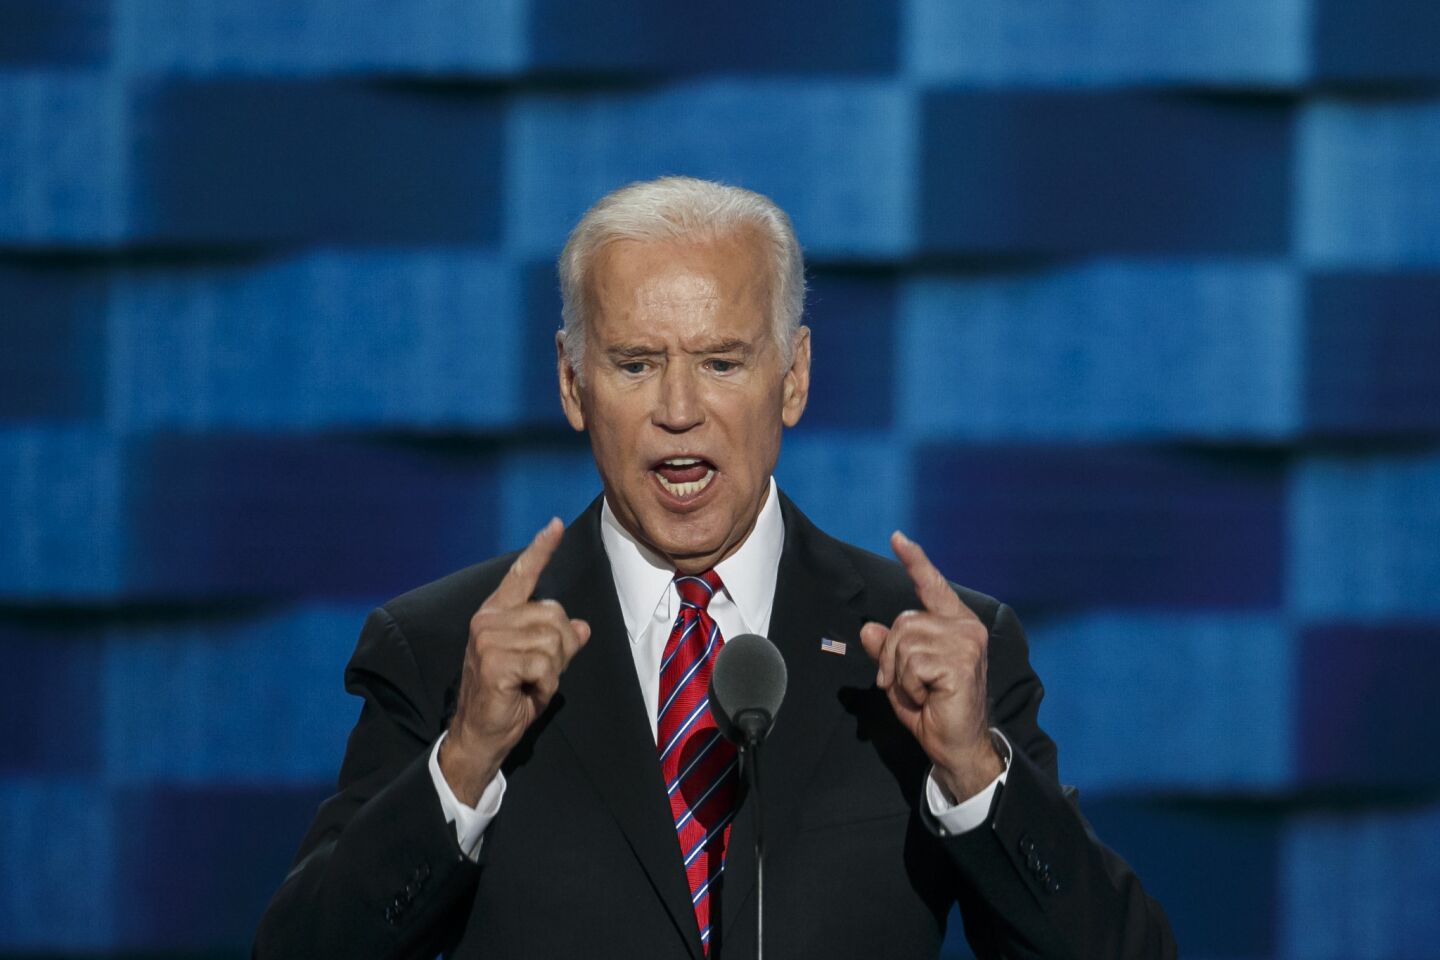 Vice President Joe Biden speak at the 2016 Democratic National Convention in Philadelphia.